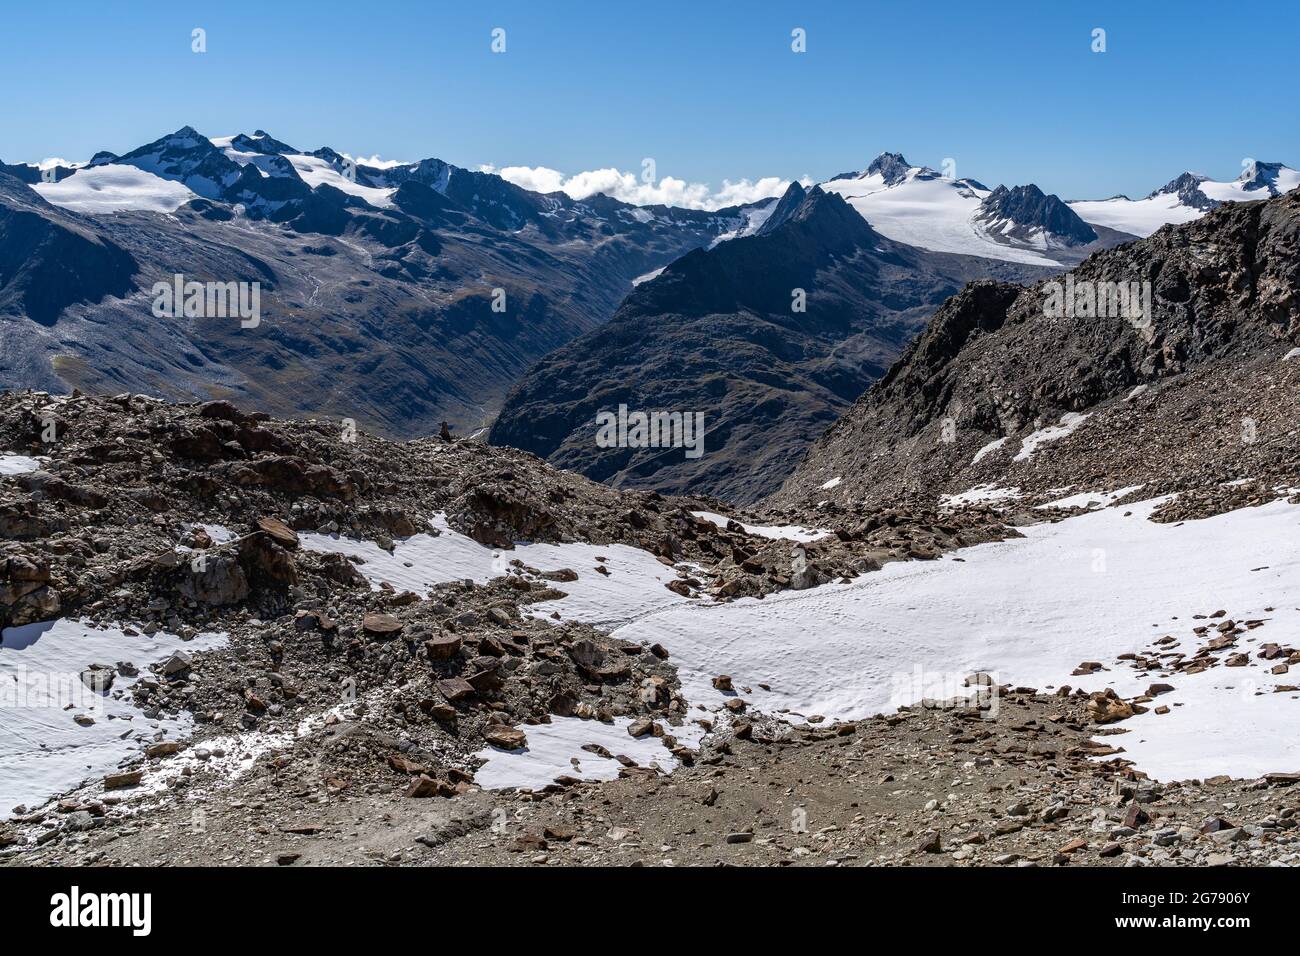 Europe, Austria, Tyrol, Ötztal Alps, Ötztal, Obergurgl, view of the mountains in the rear Gurgler valley Stock Photo